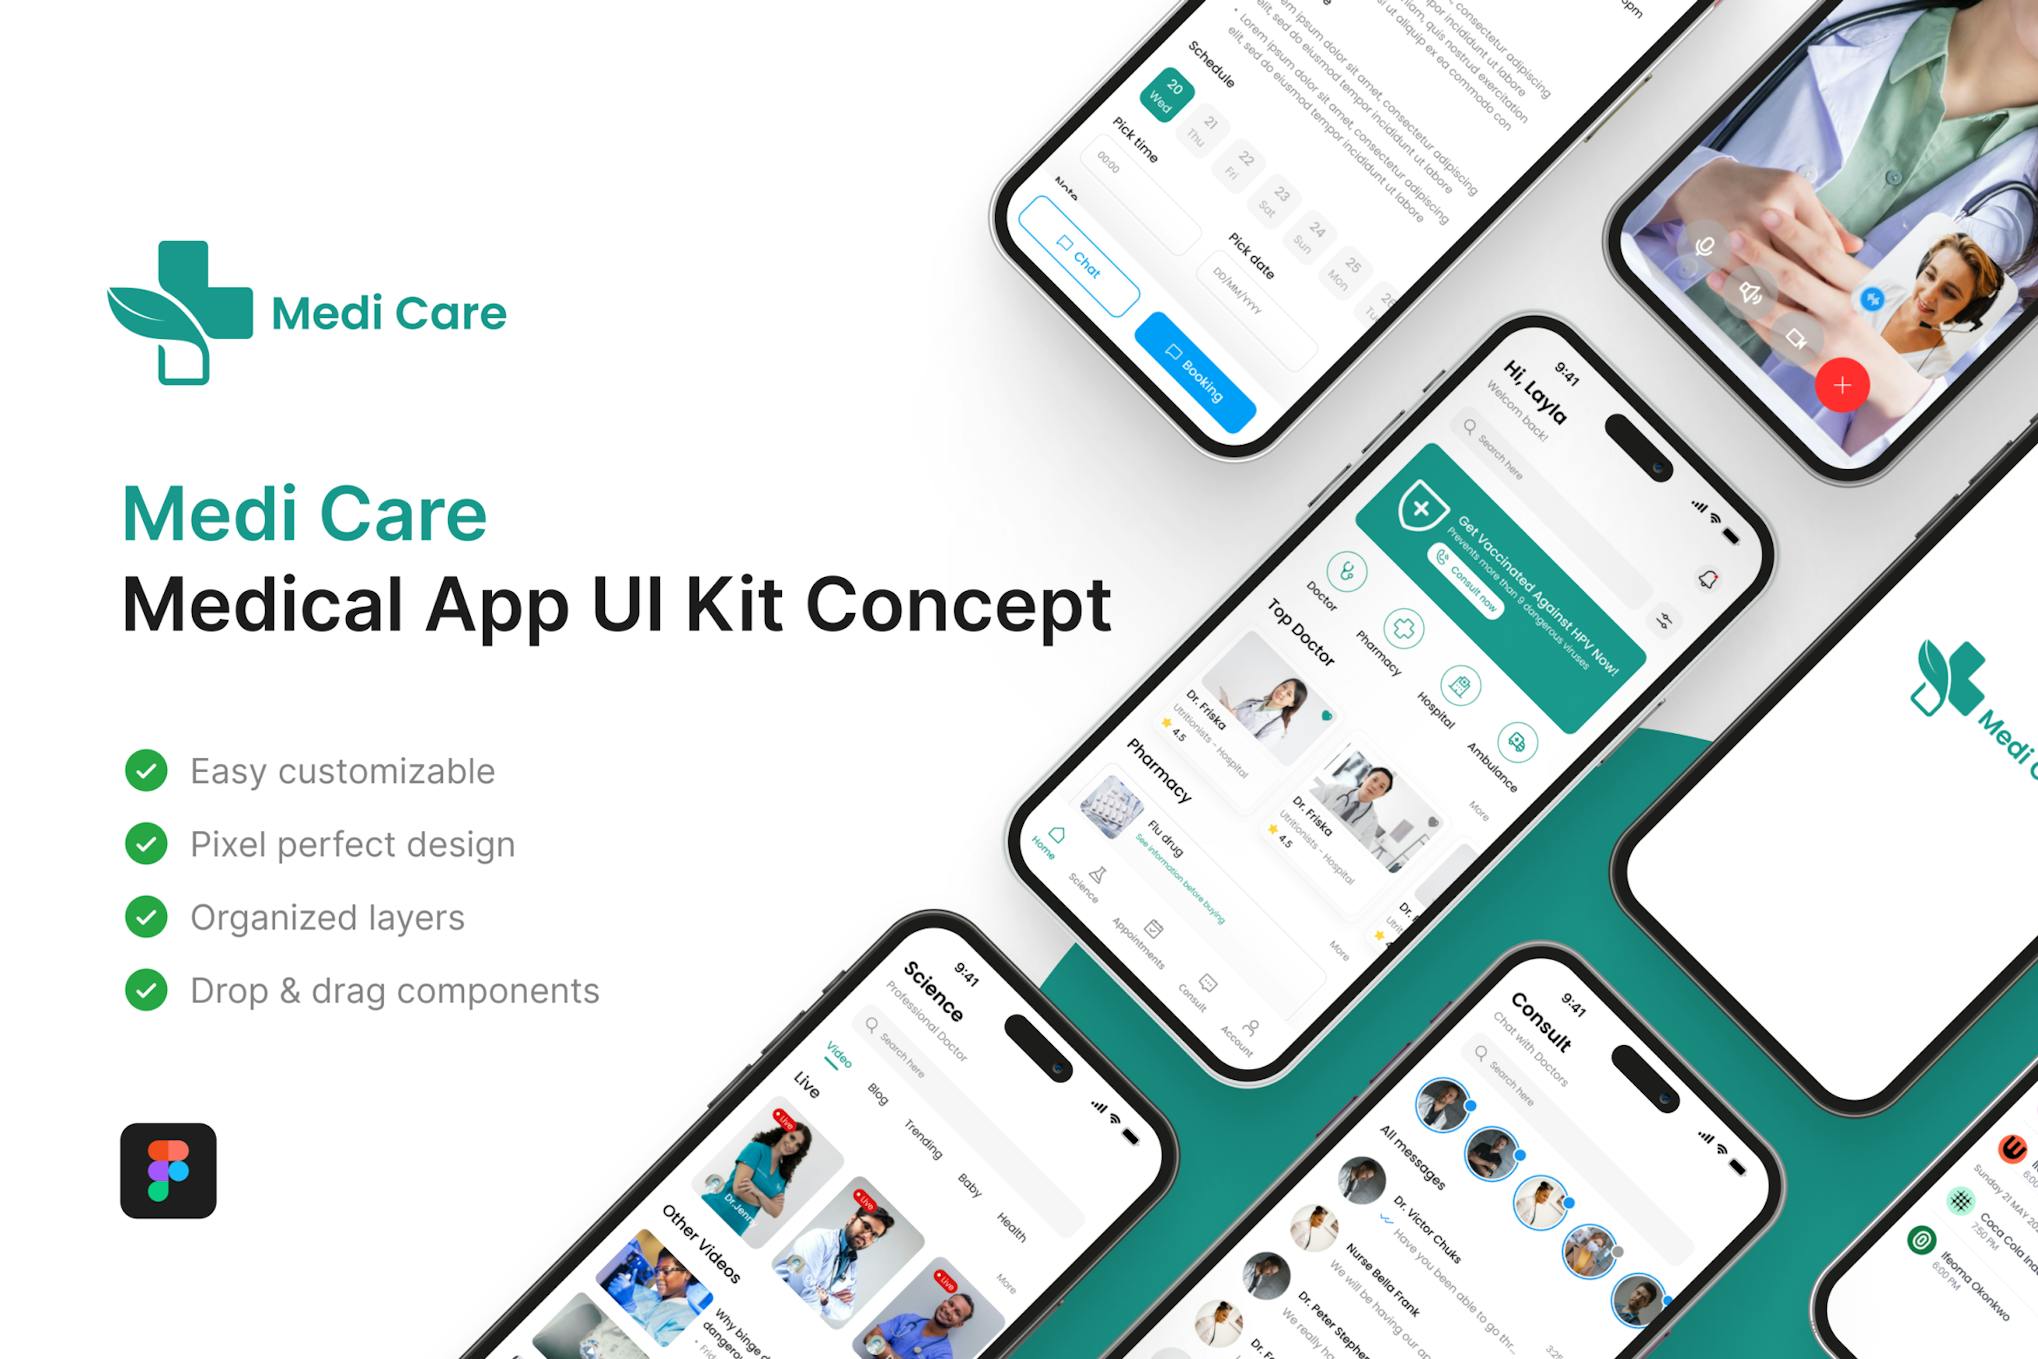 Medi Care - Medical App UI Kit